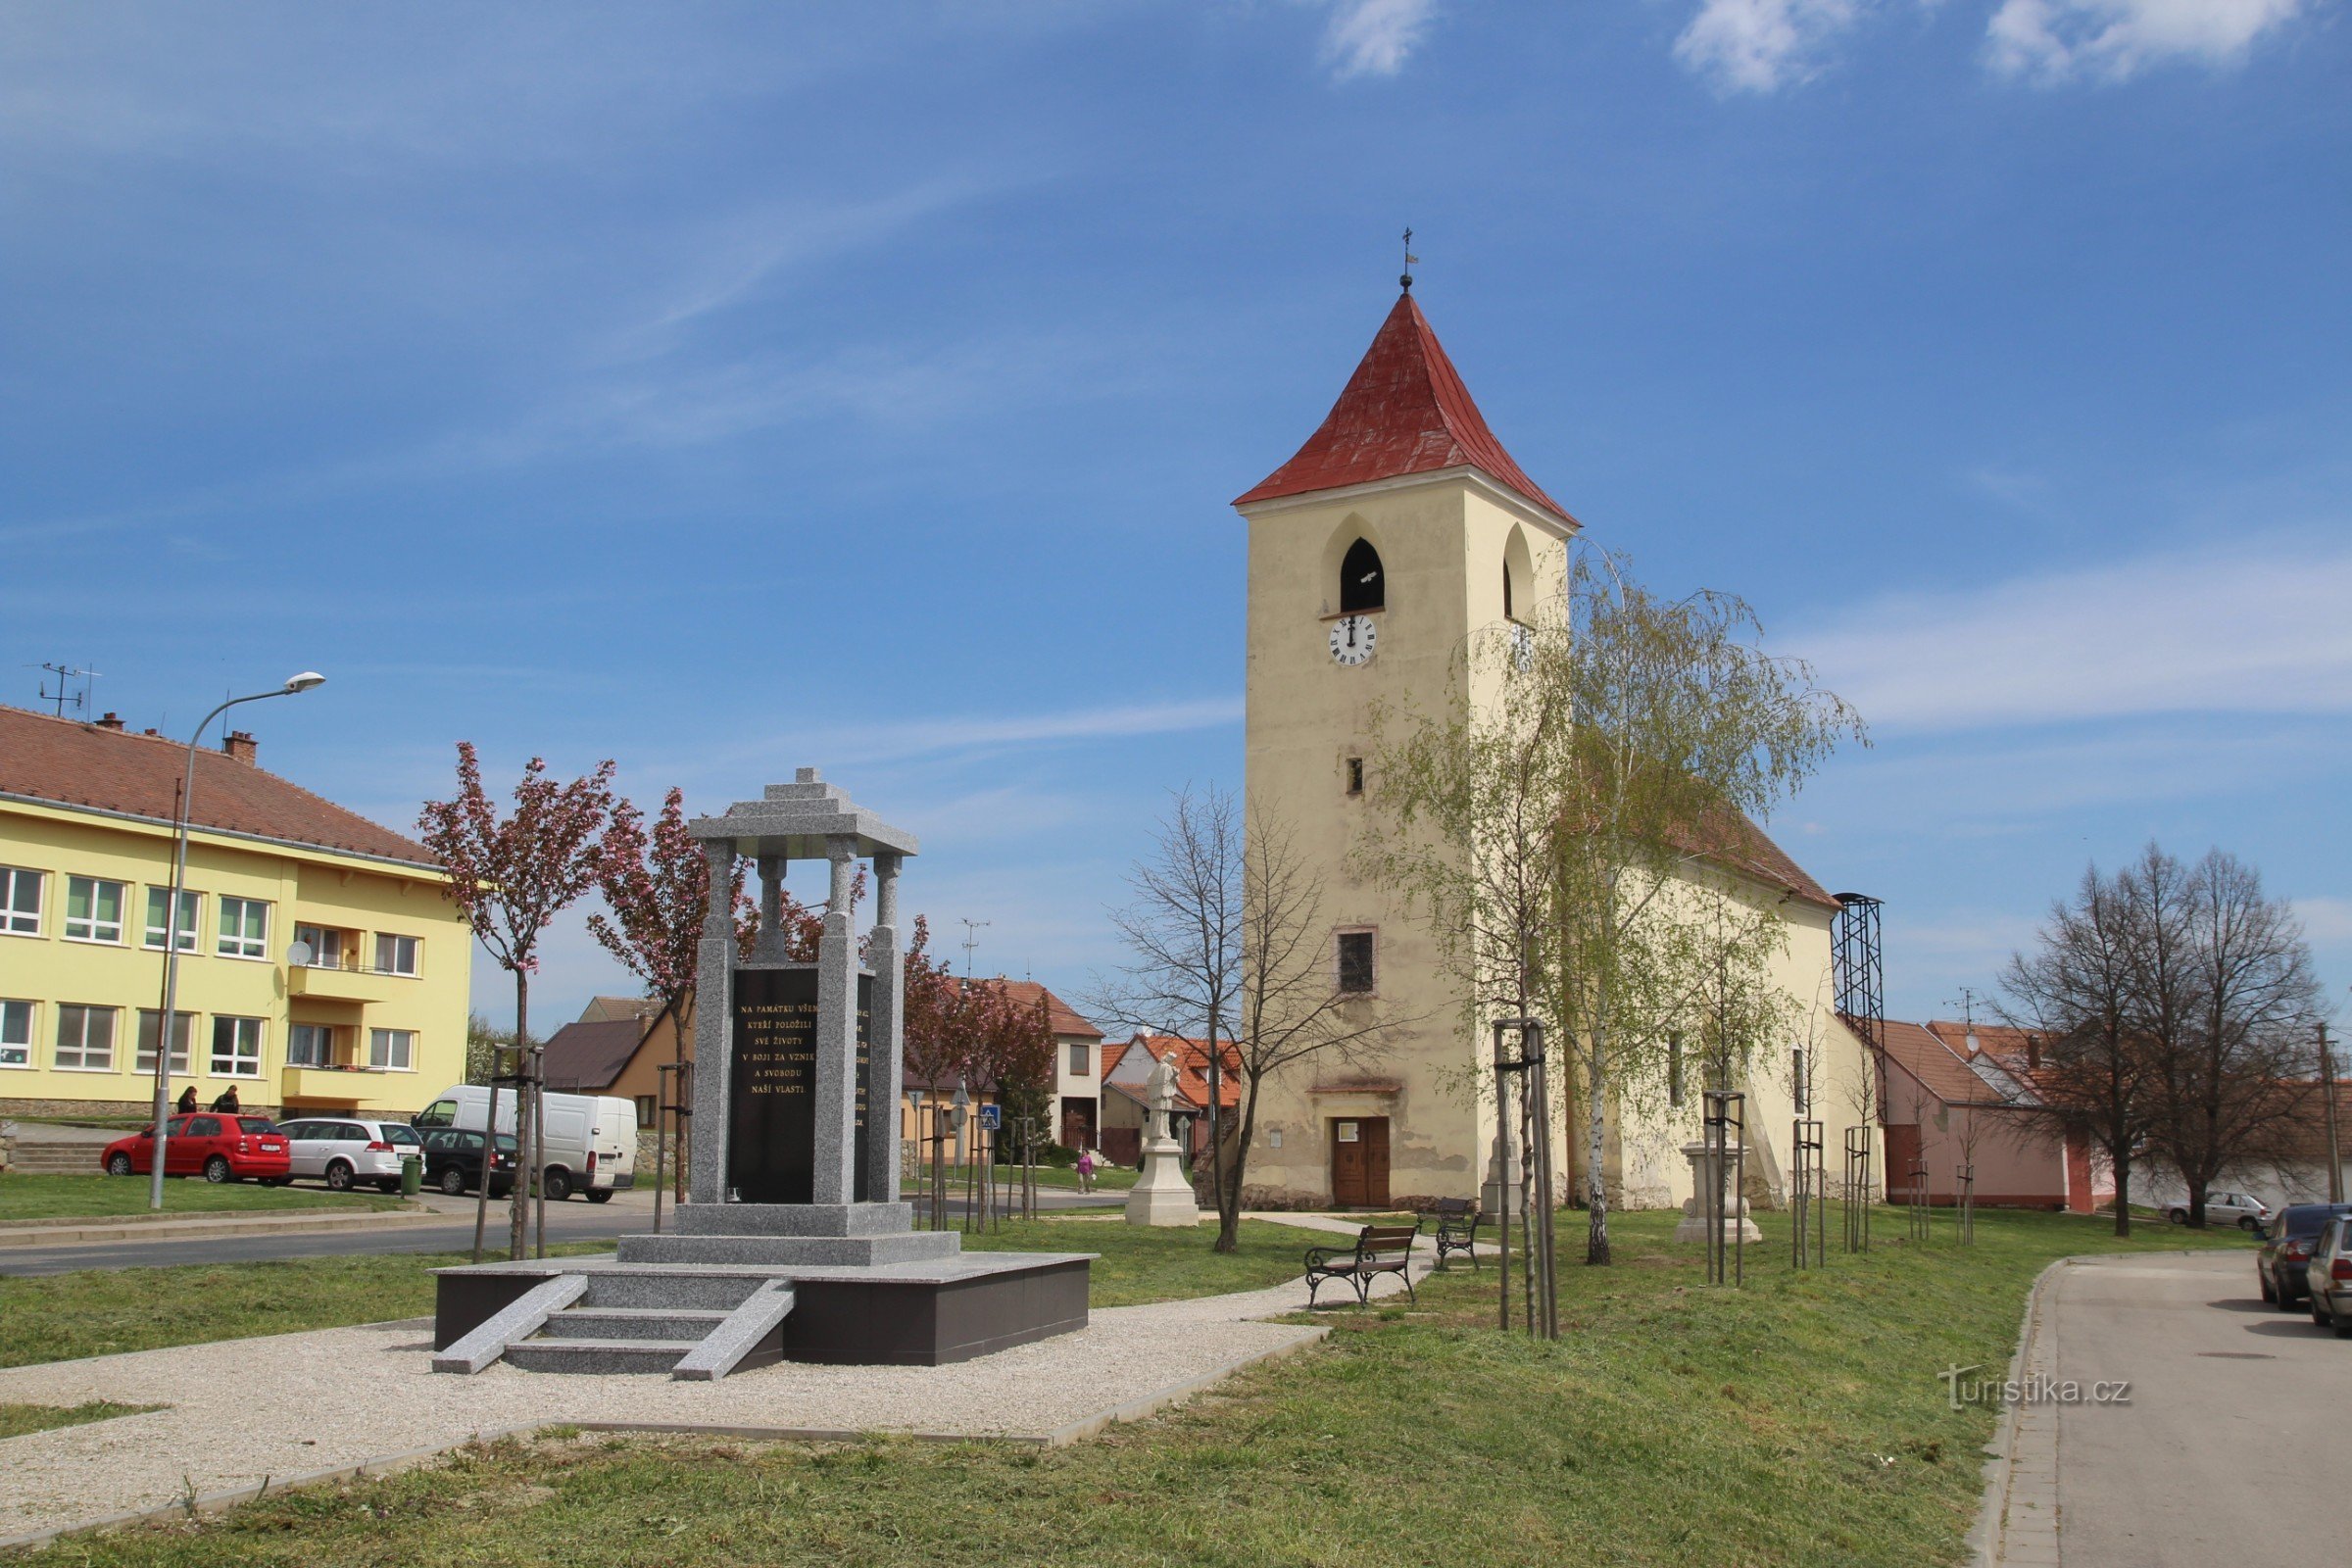 Sedlecká oplegger met de kerk van St. Welkom